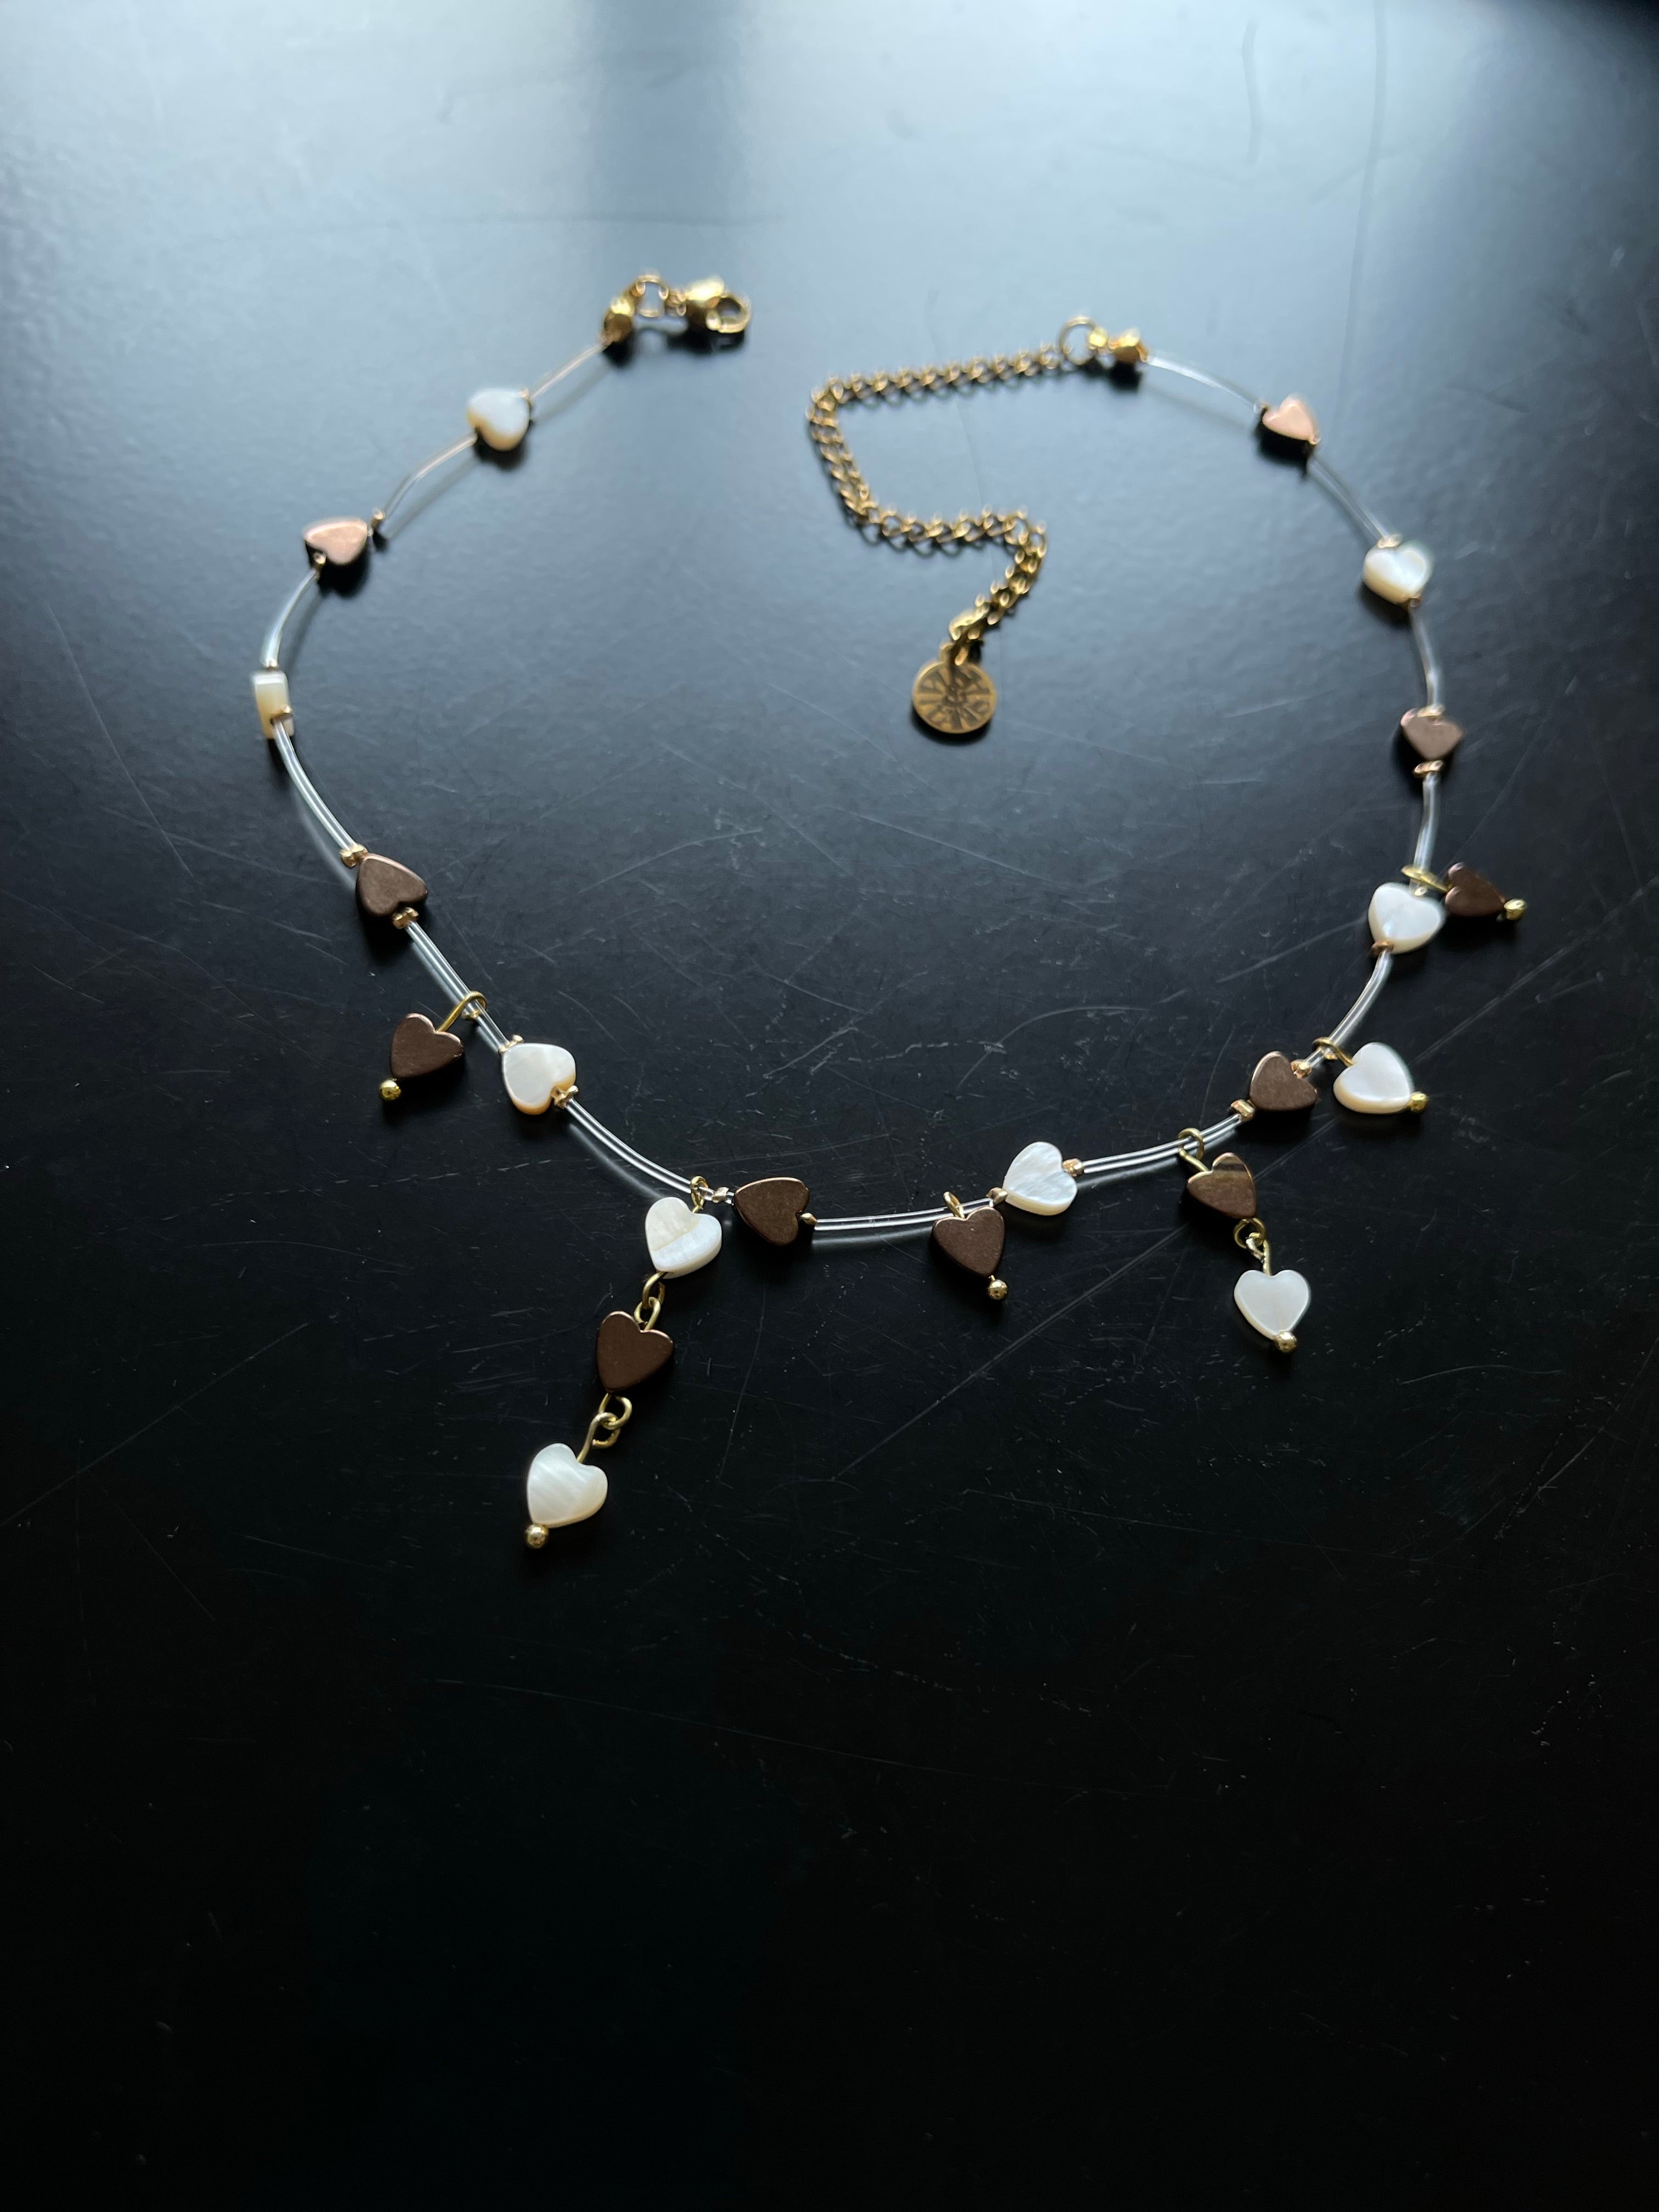 the "Anastasia" Necklace